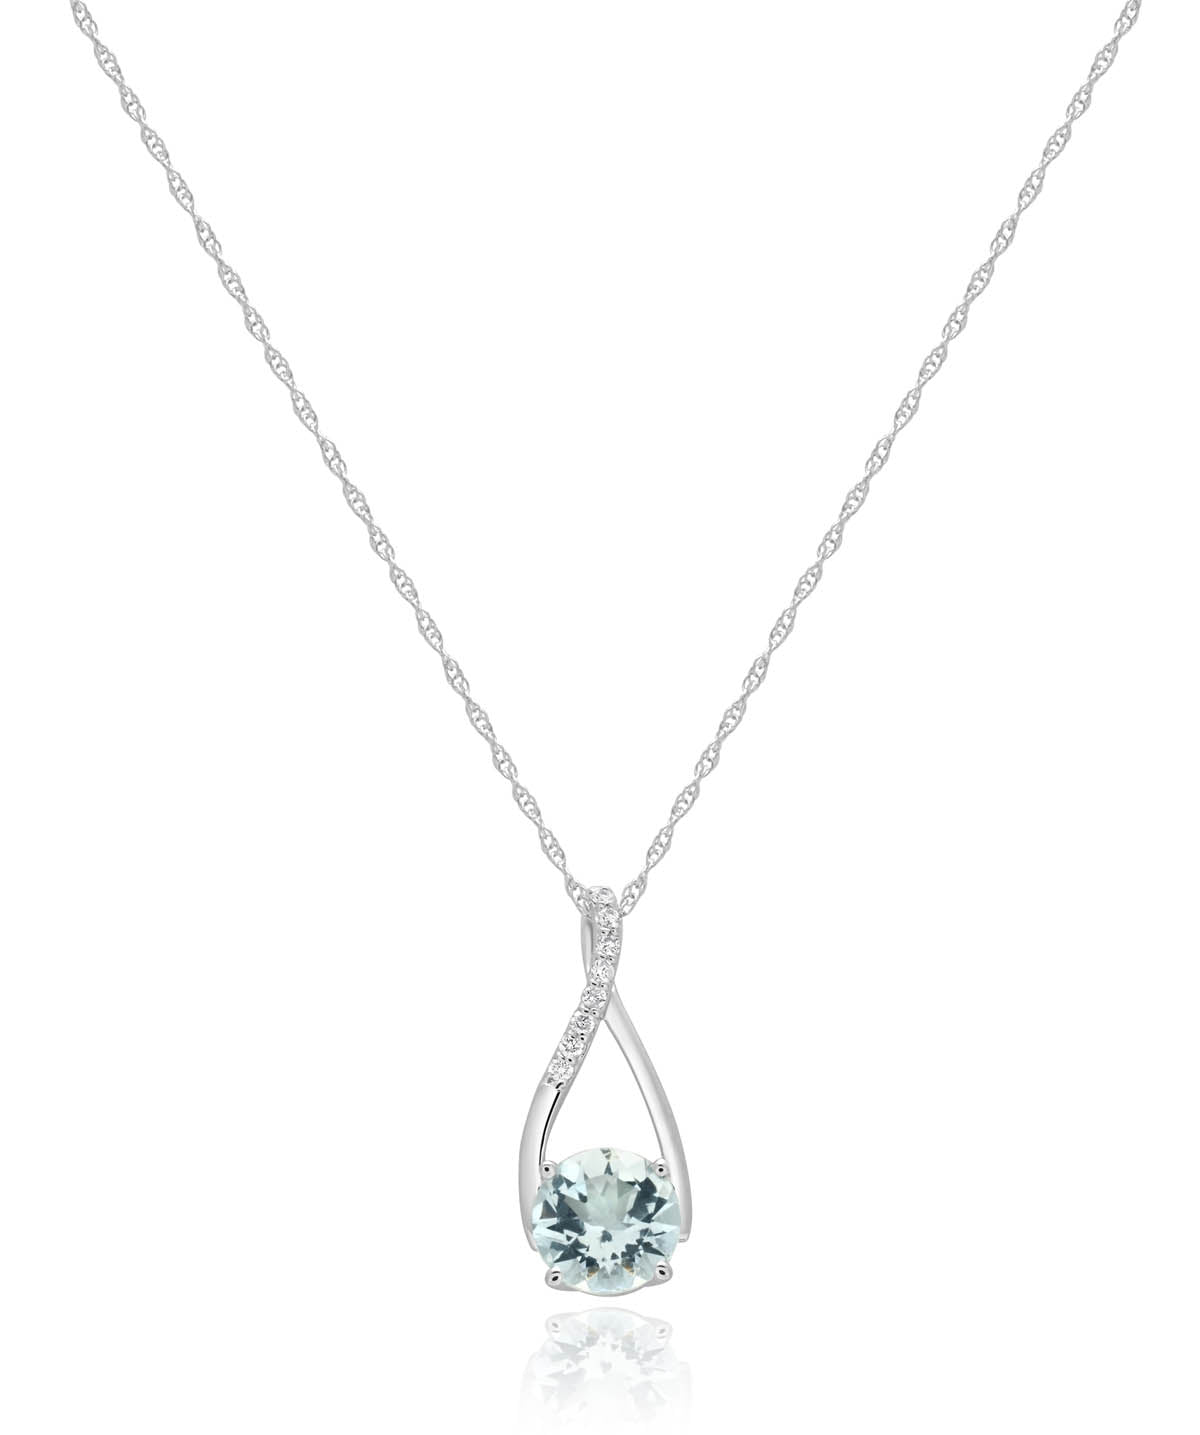 14K White Gold Aquamarine and Diamond Free Form Pendant Necklace